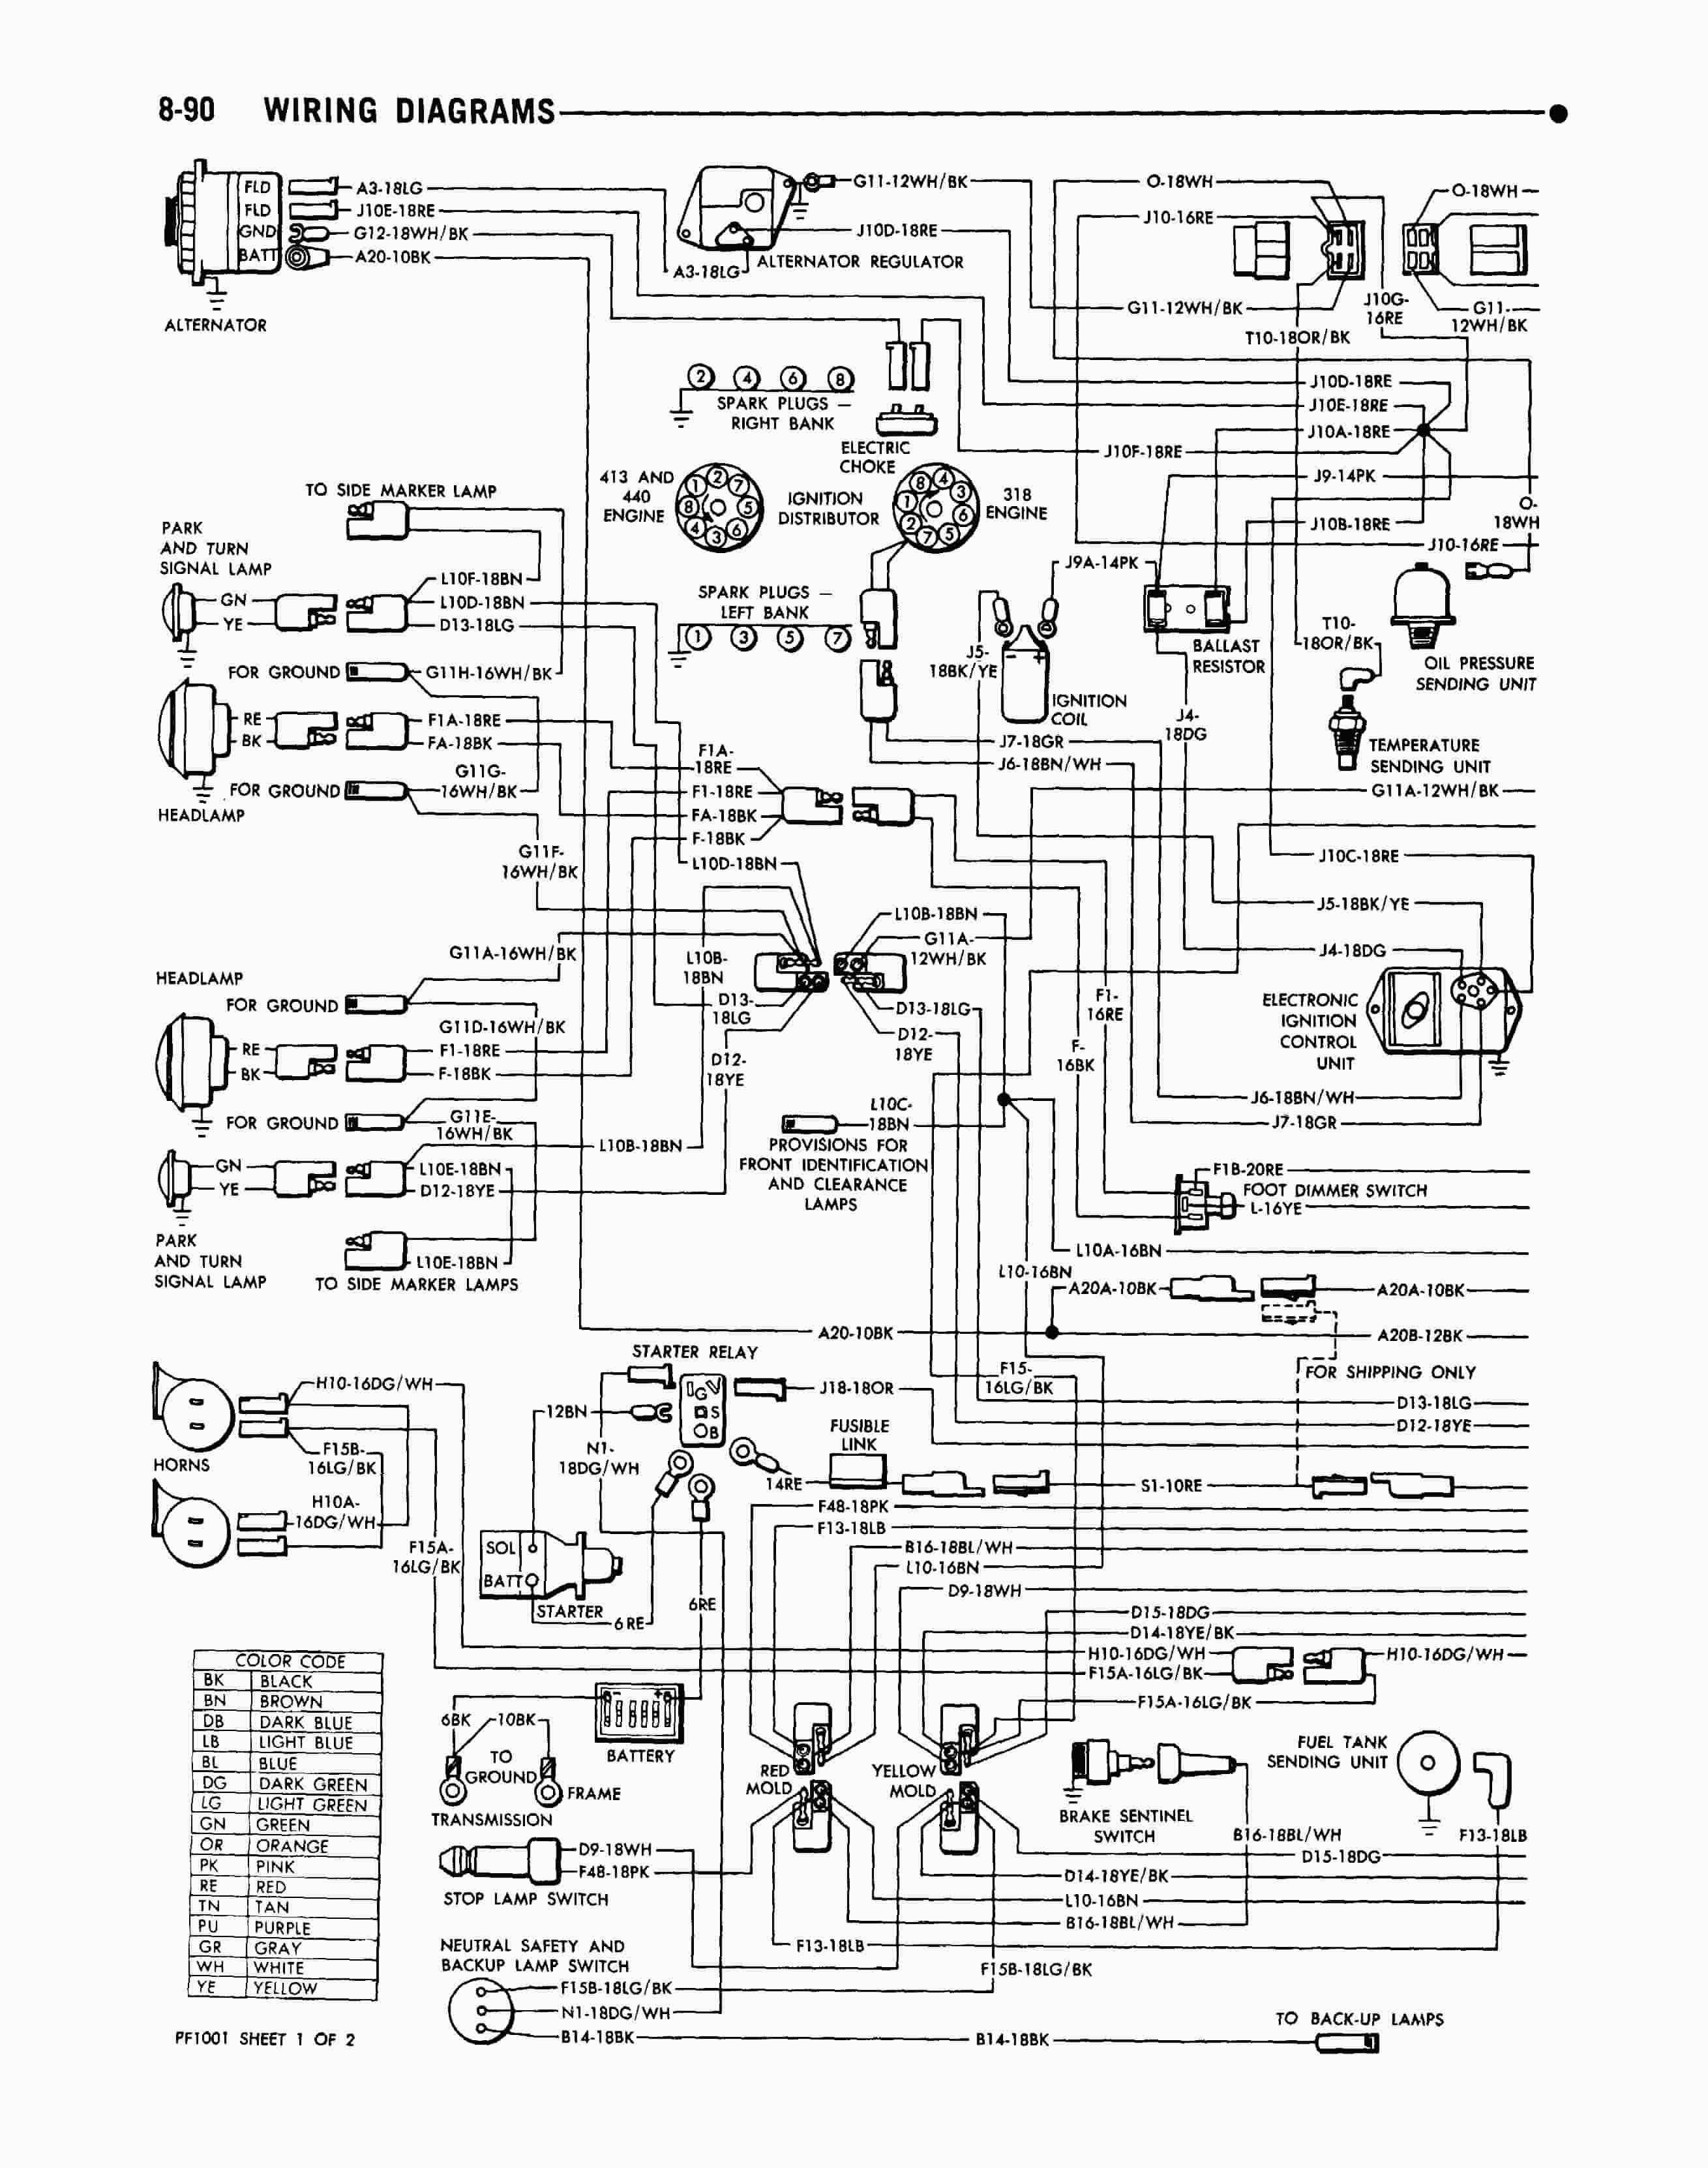 1976 Dodge Truck Wiring Diagram from mainetreasurechest.com